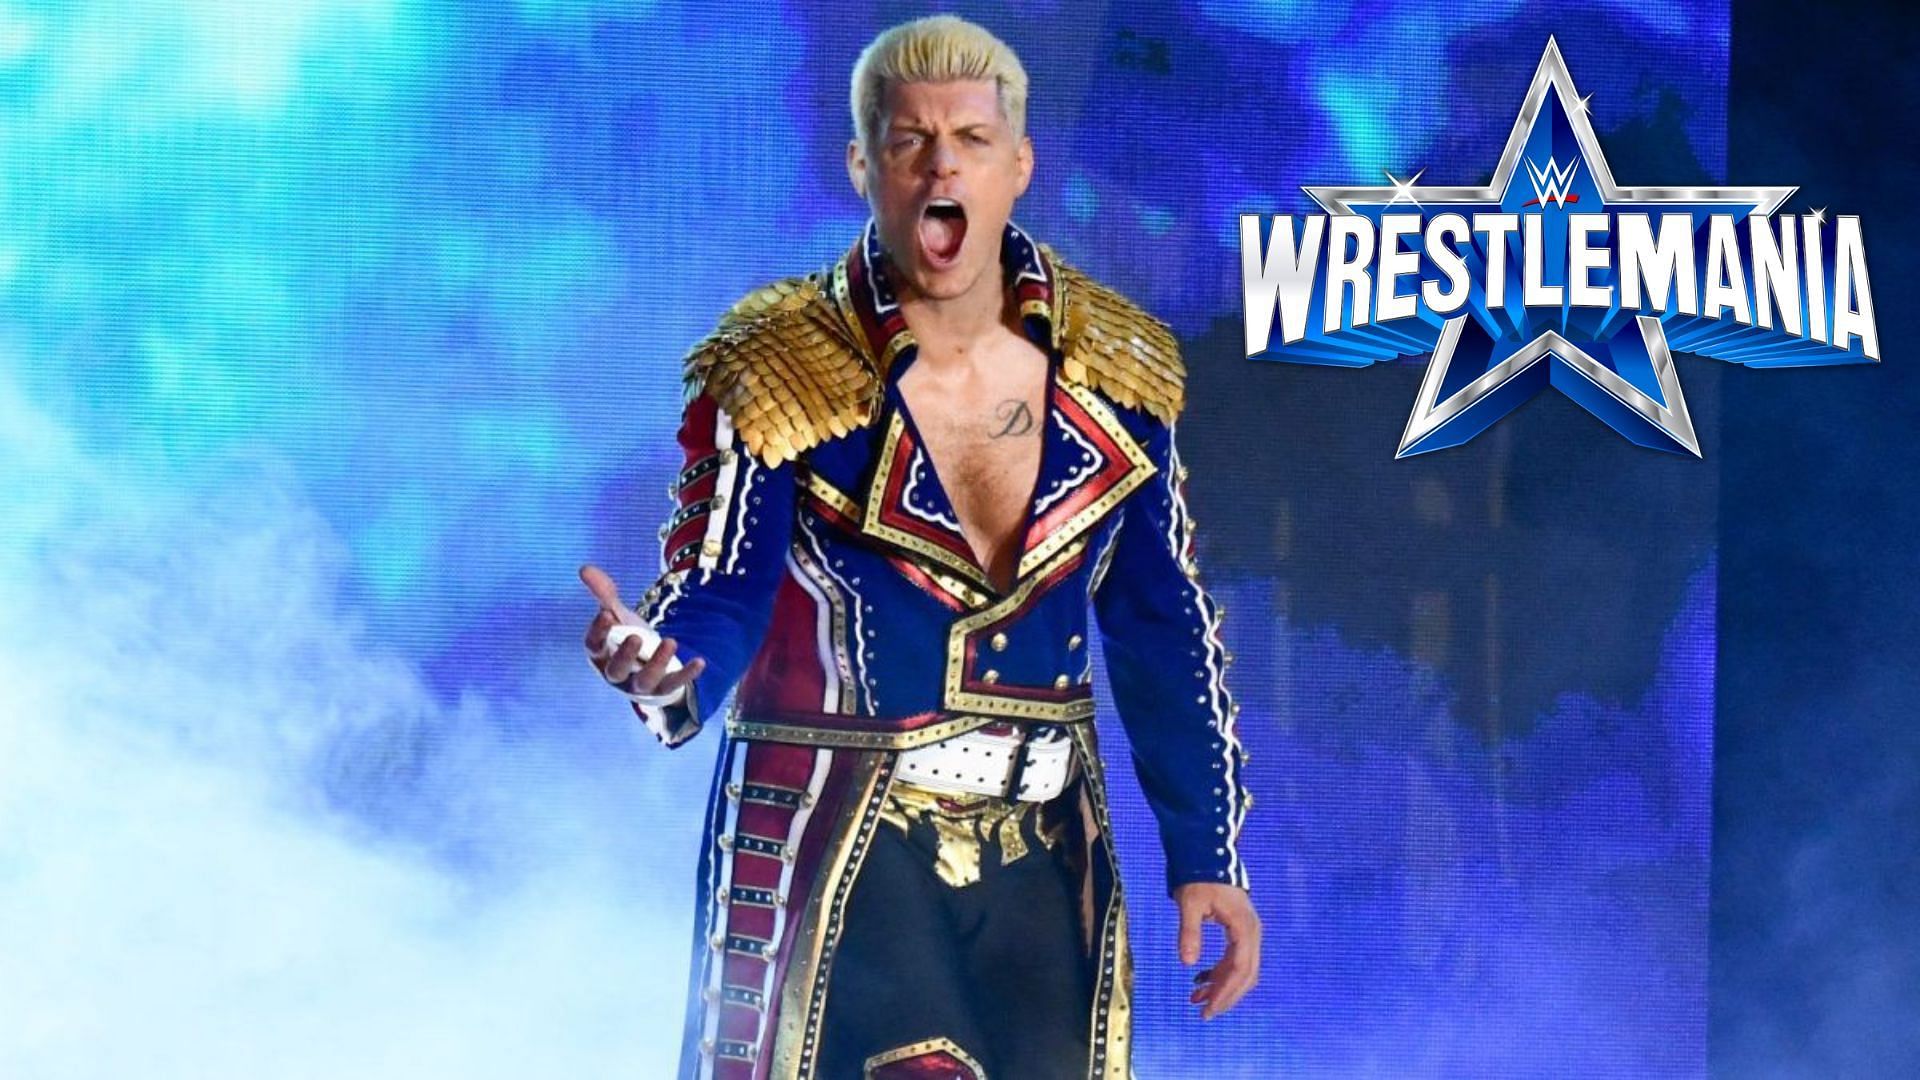 Cody Rhodes making his WWE return at WrestleMania.